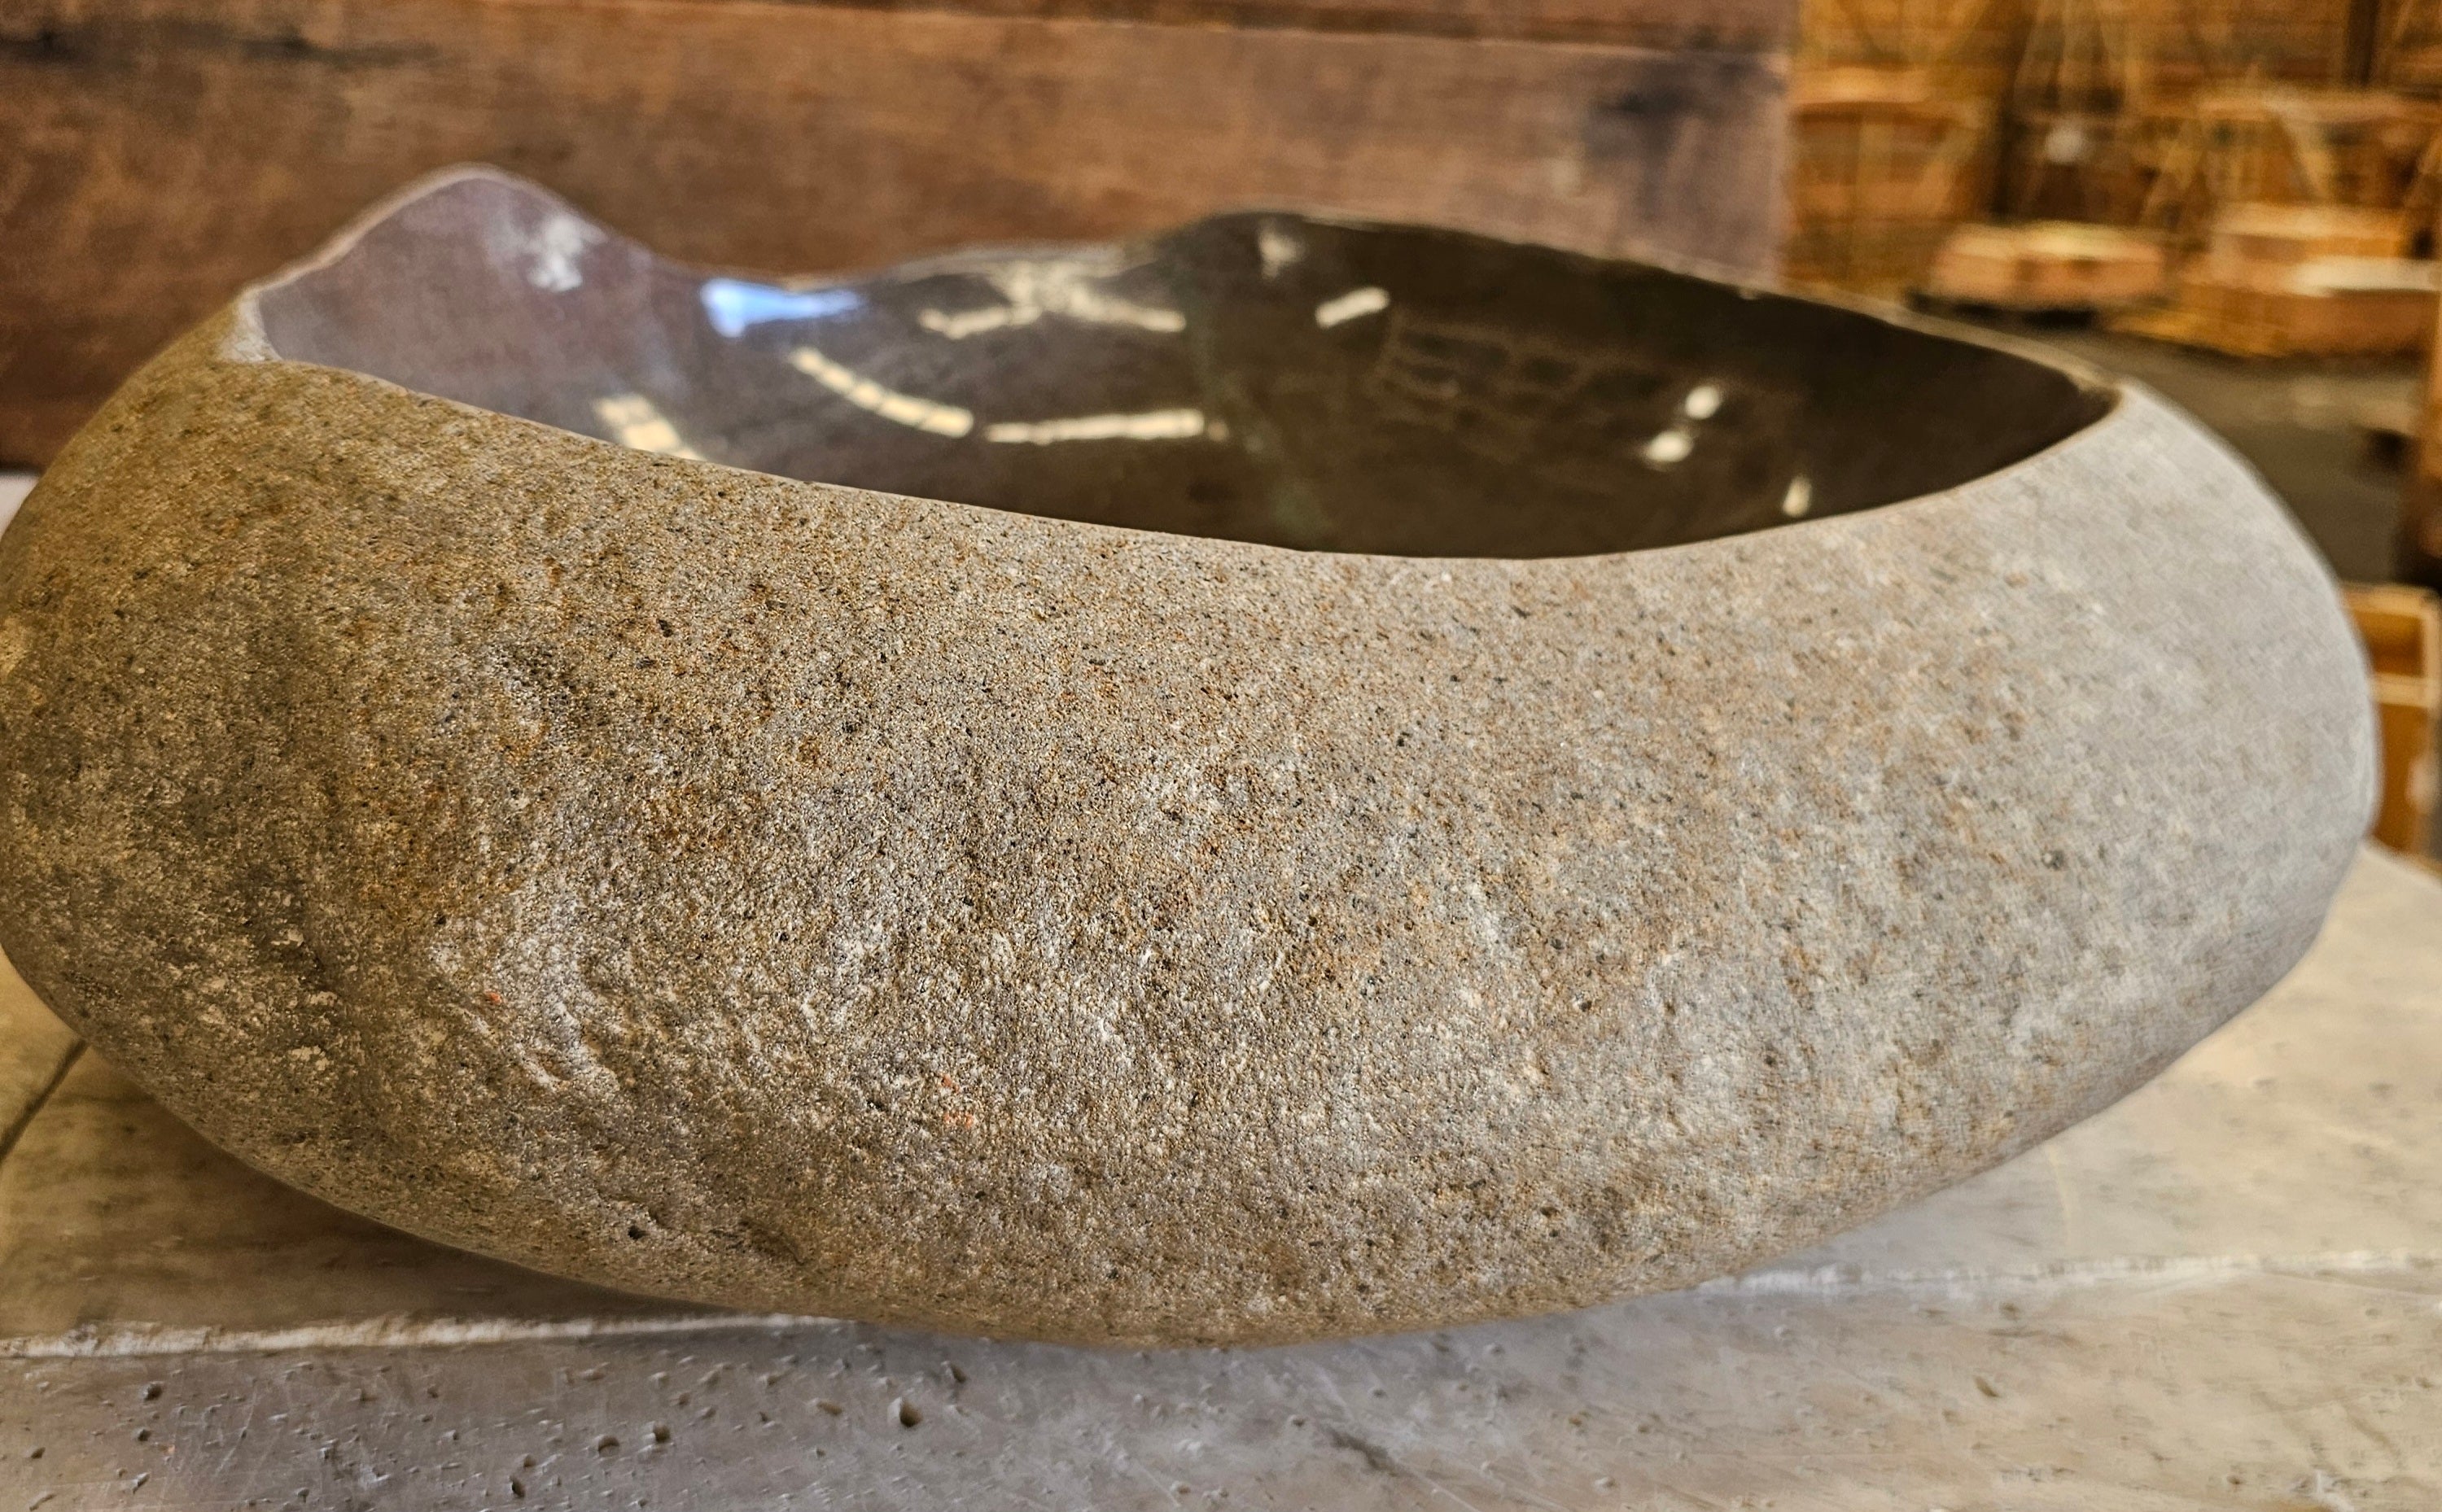 Handmade Natural Oval River Stone Bathroom Basin - RVL 2212550